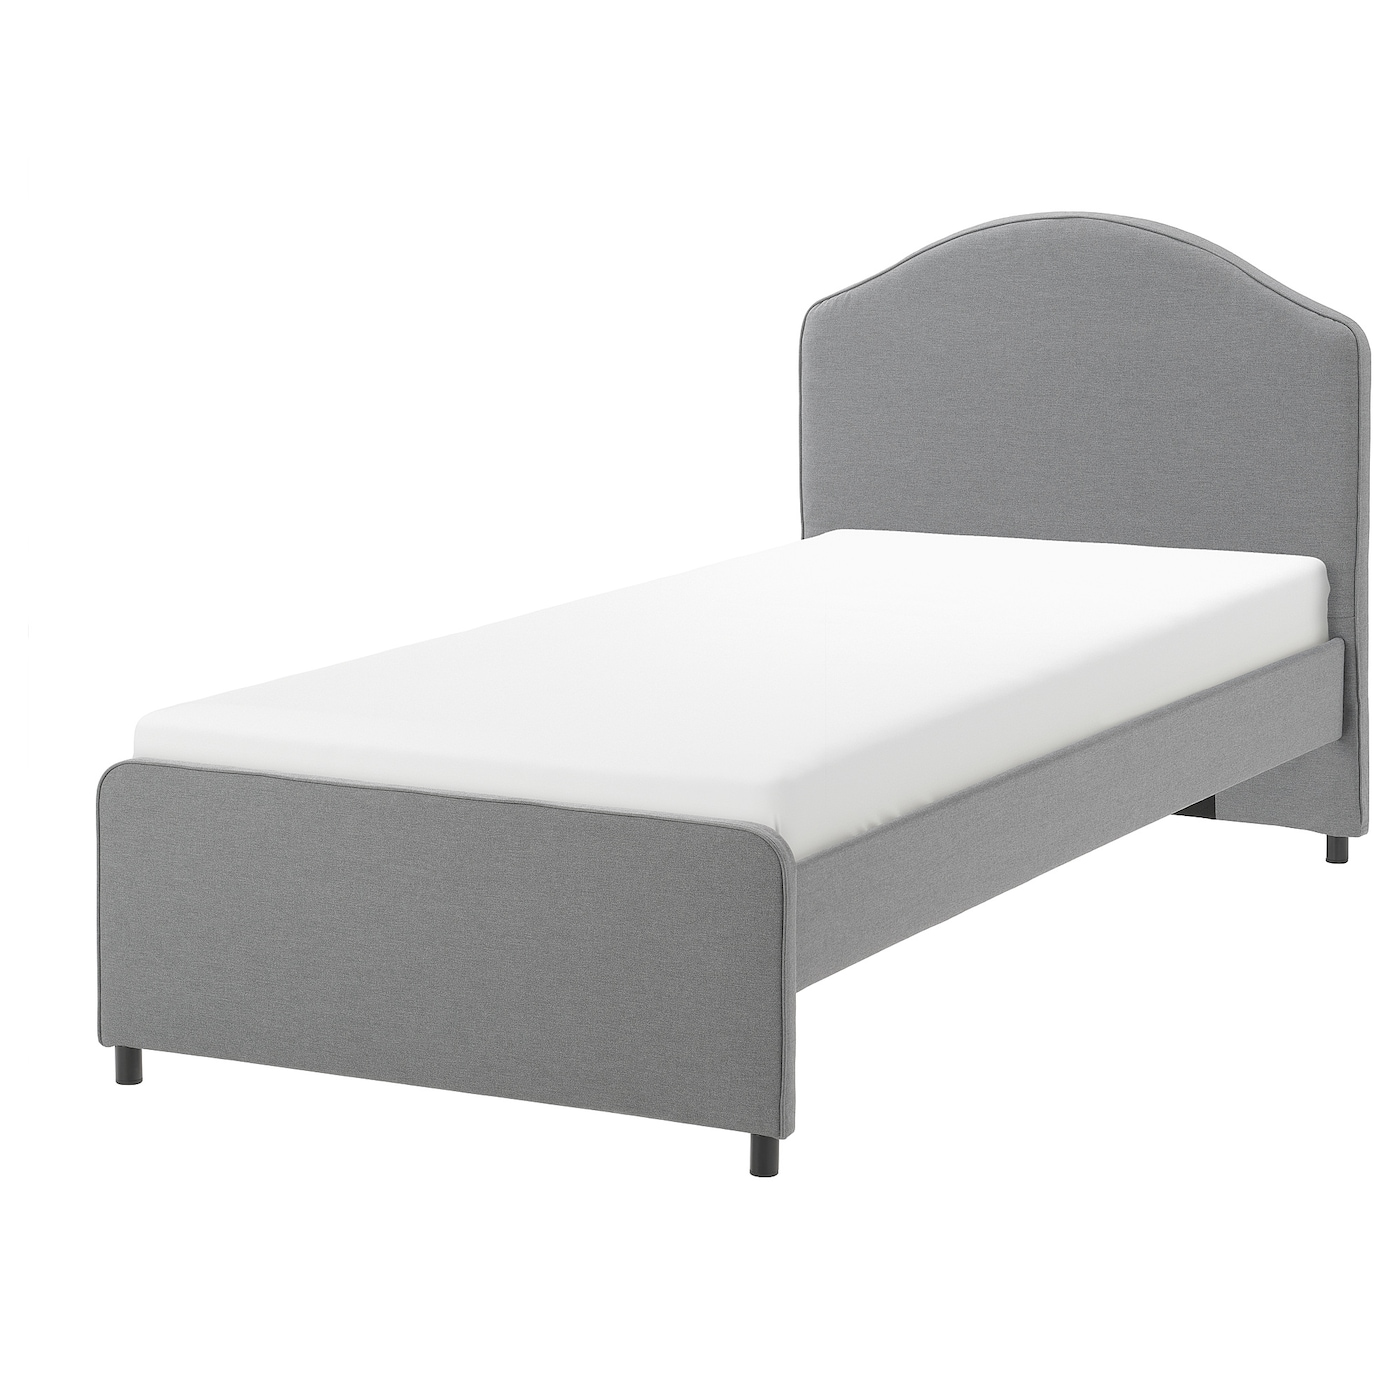 Каркас кровати с мягкой обивкой - IKEA HAUGA, 200х90 см, серый, ХАУГА ИКЕА